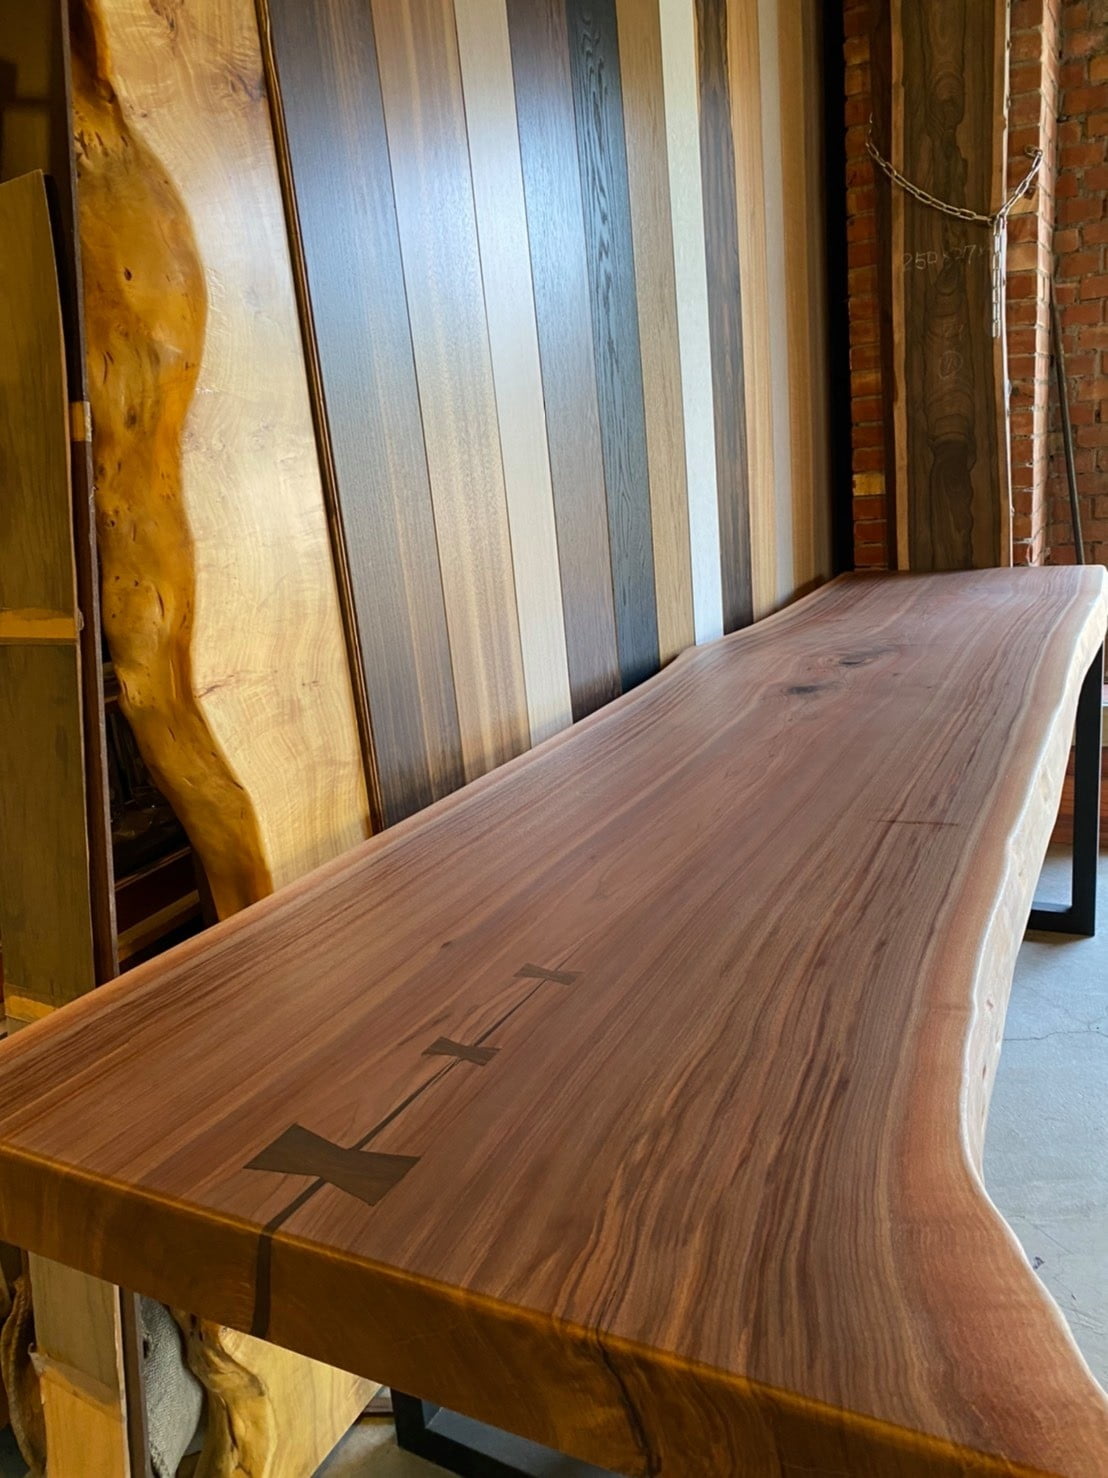 LINE ALBUM 桌凳 230421 47 1 木制品 木製 家具訂製 高雄家具 傢俱 客製化,高雄家具,高雄傢俱,IKEA,桌板訂製,訂製,專屬,木製品